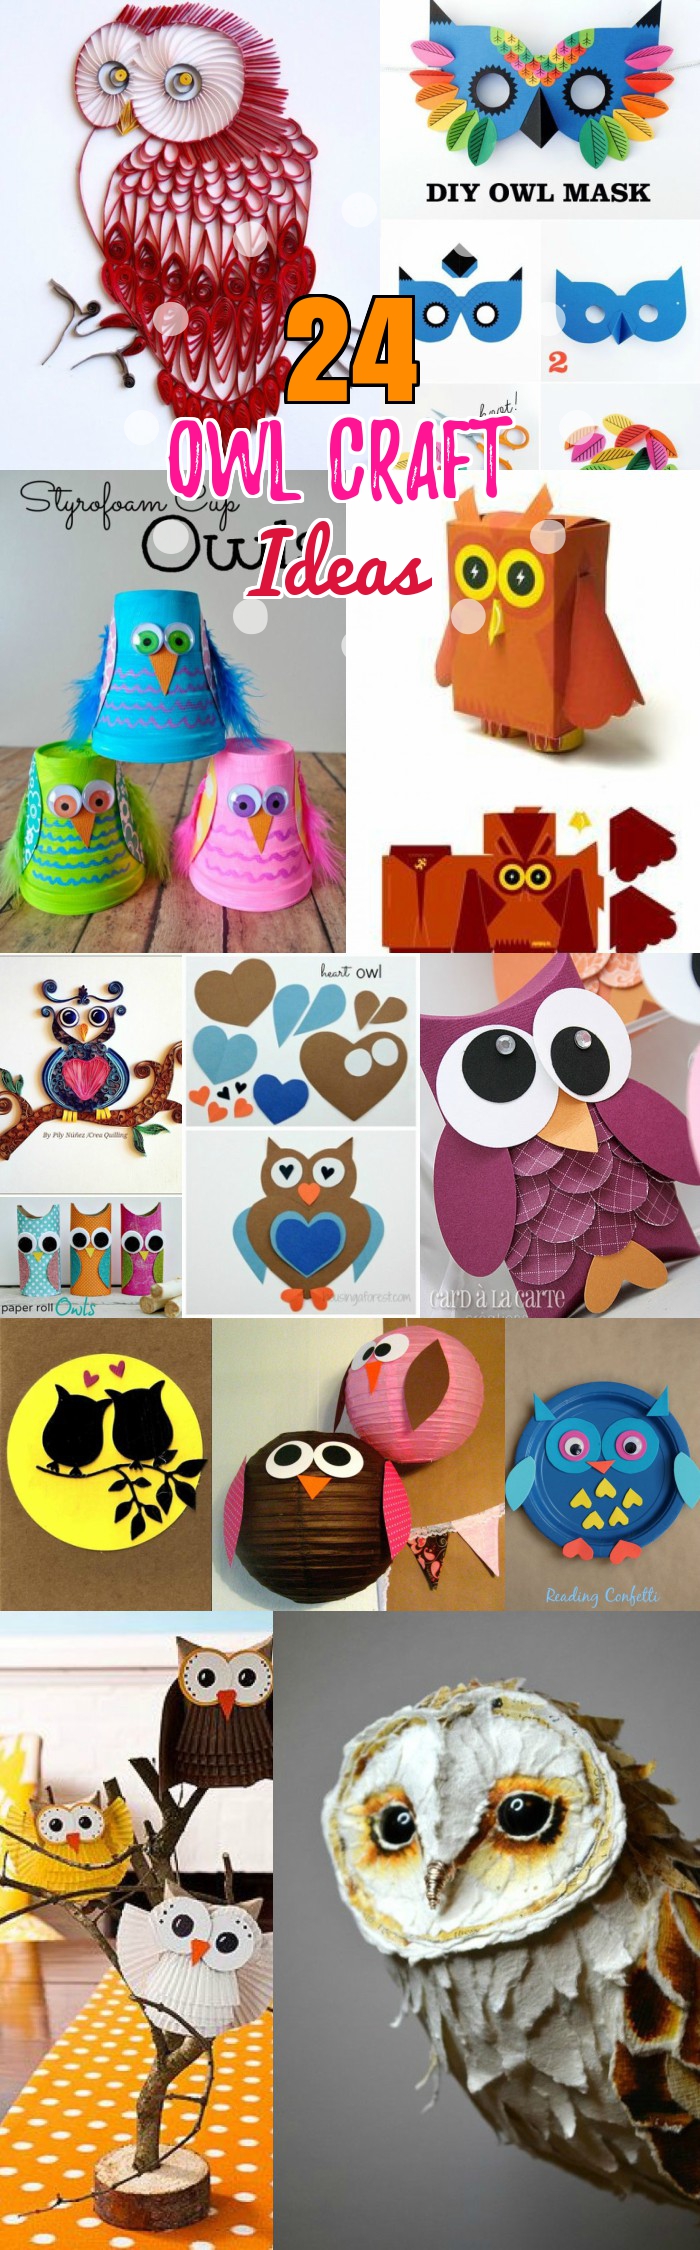 Owl Craft ideas